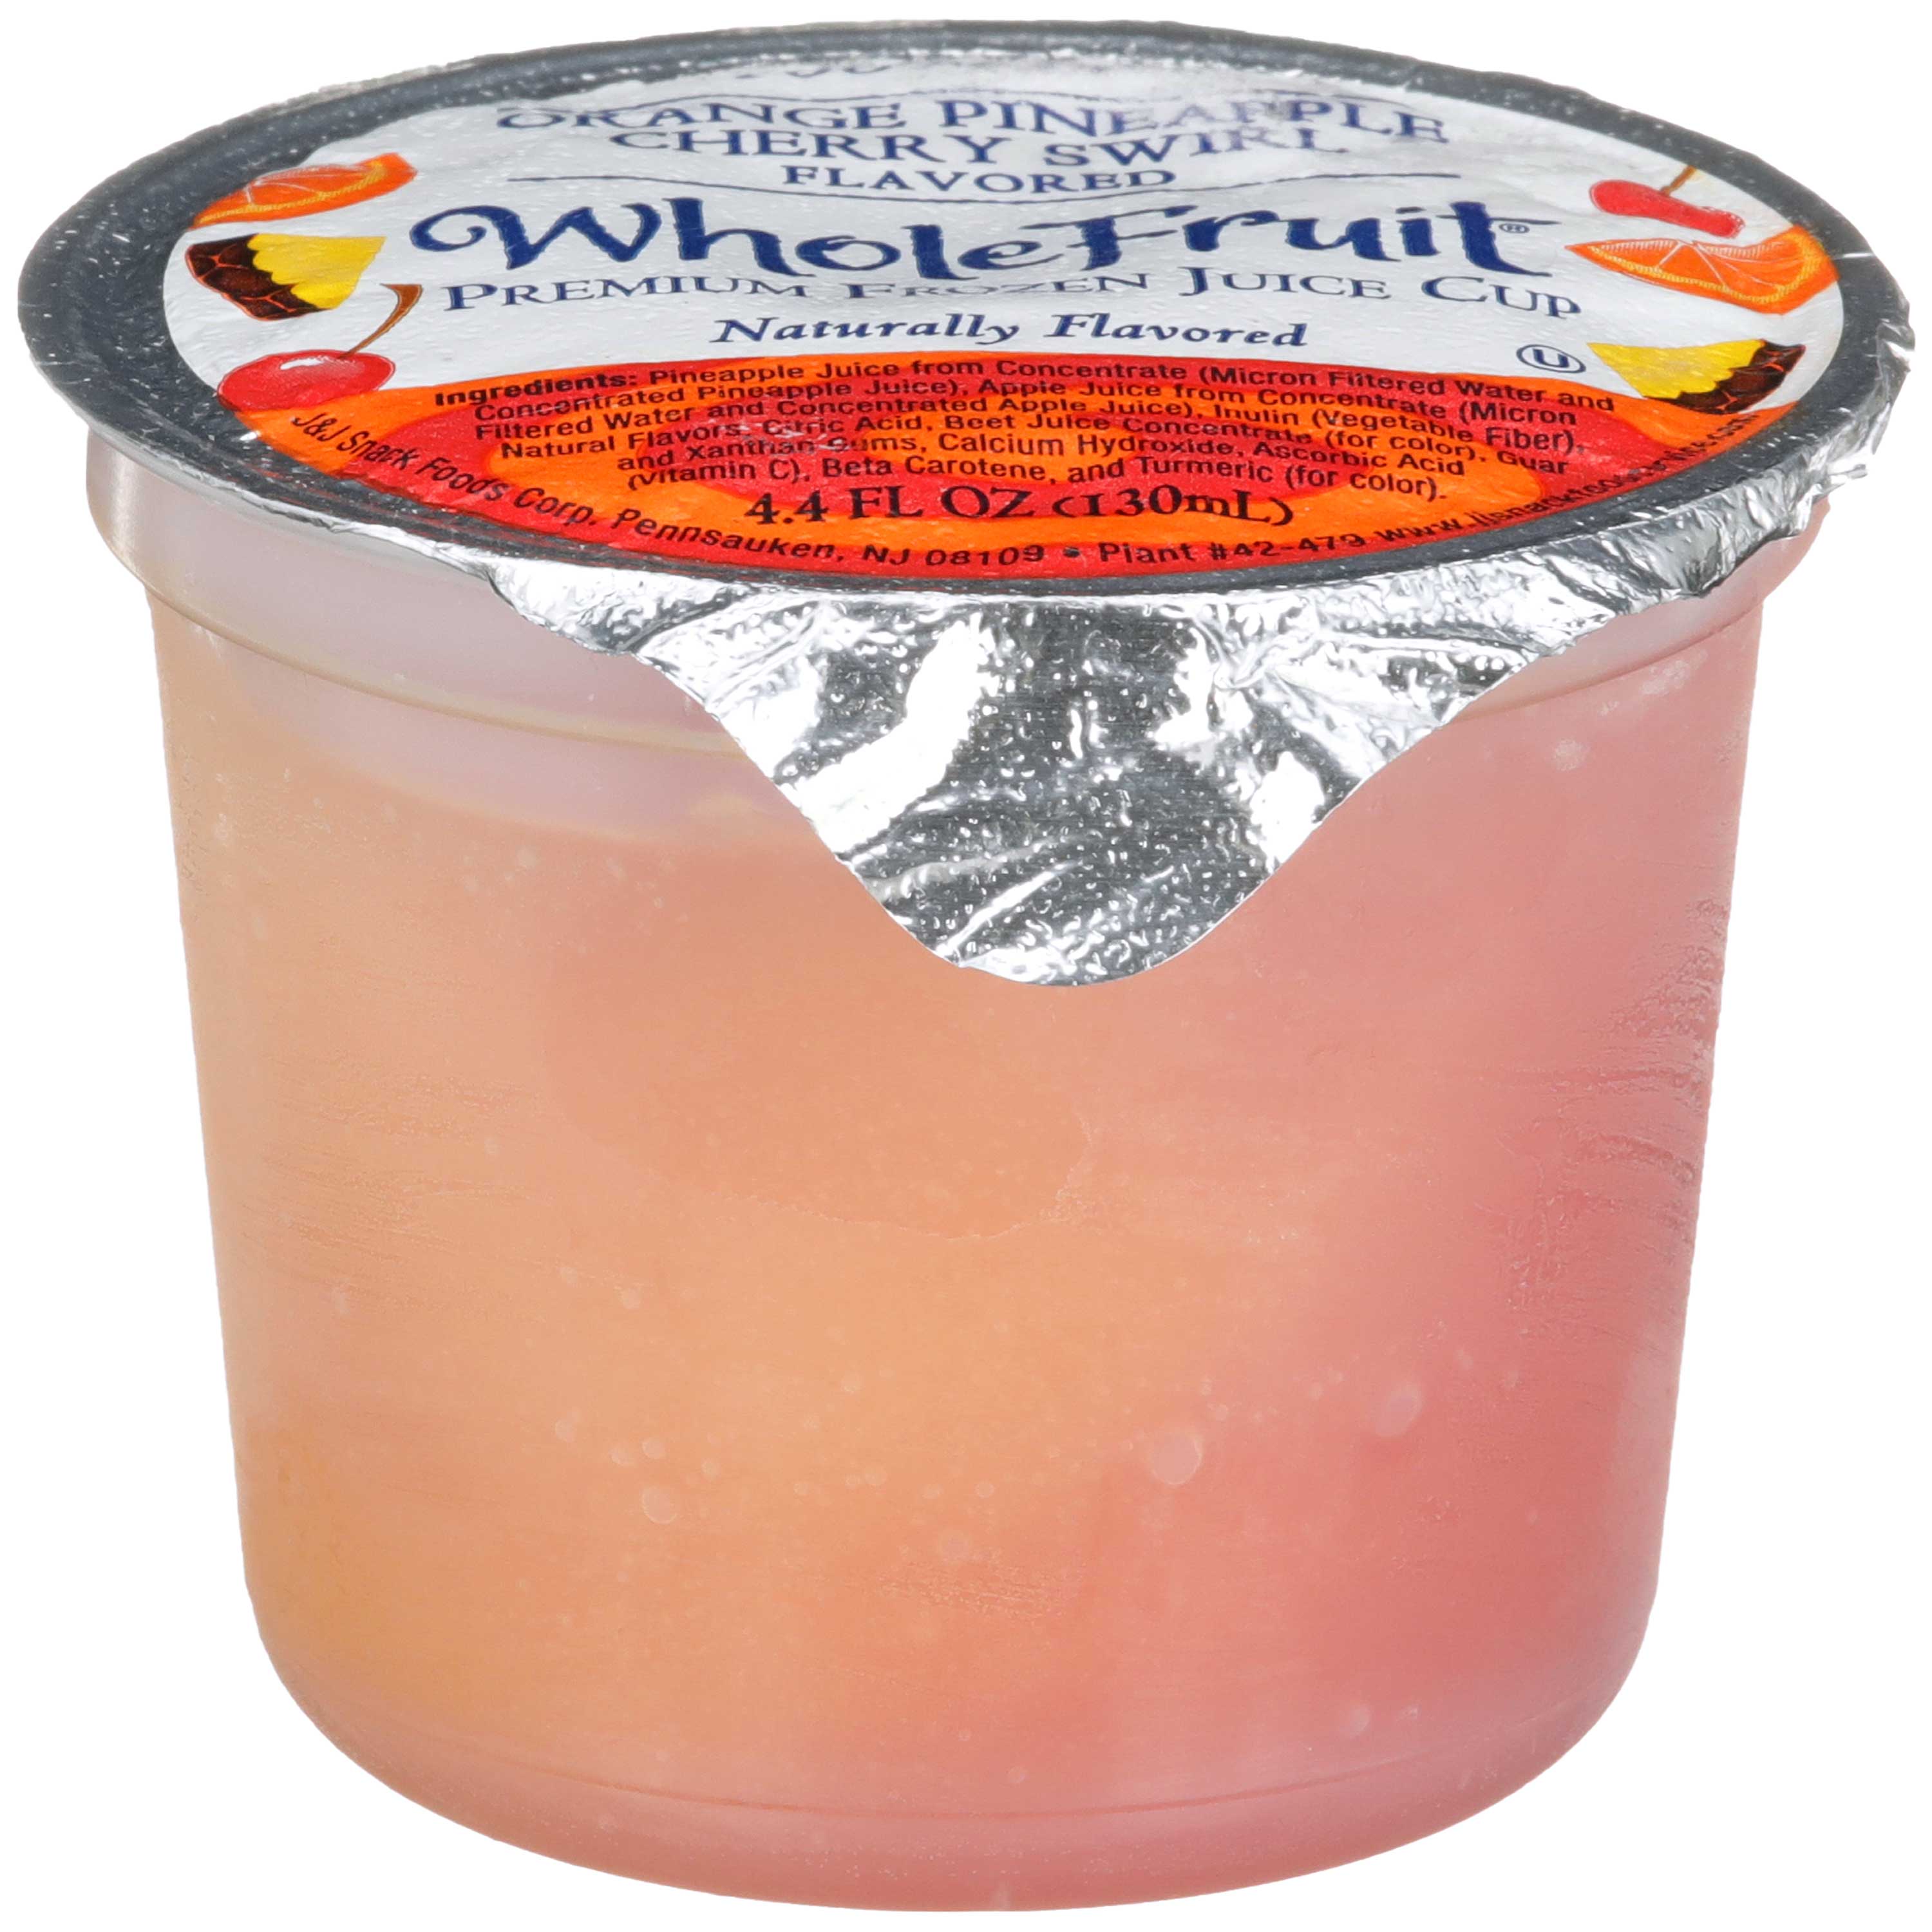 Whole Fruit Orange Pineapple and Cherry Swirl Premium Frozen Juice Cup, 4.4 ounce -- 96 per case